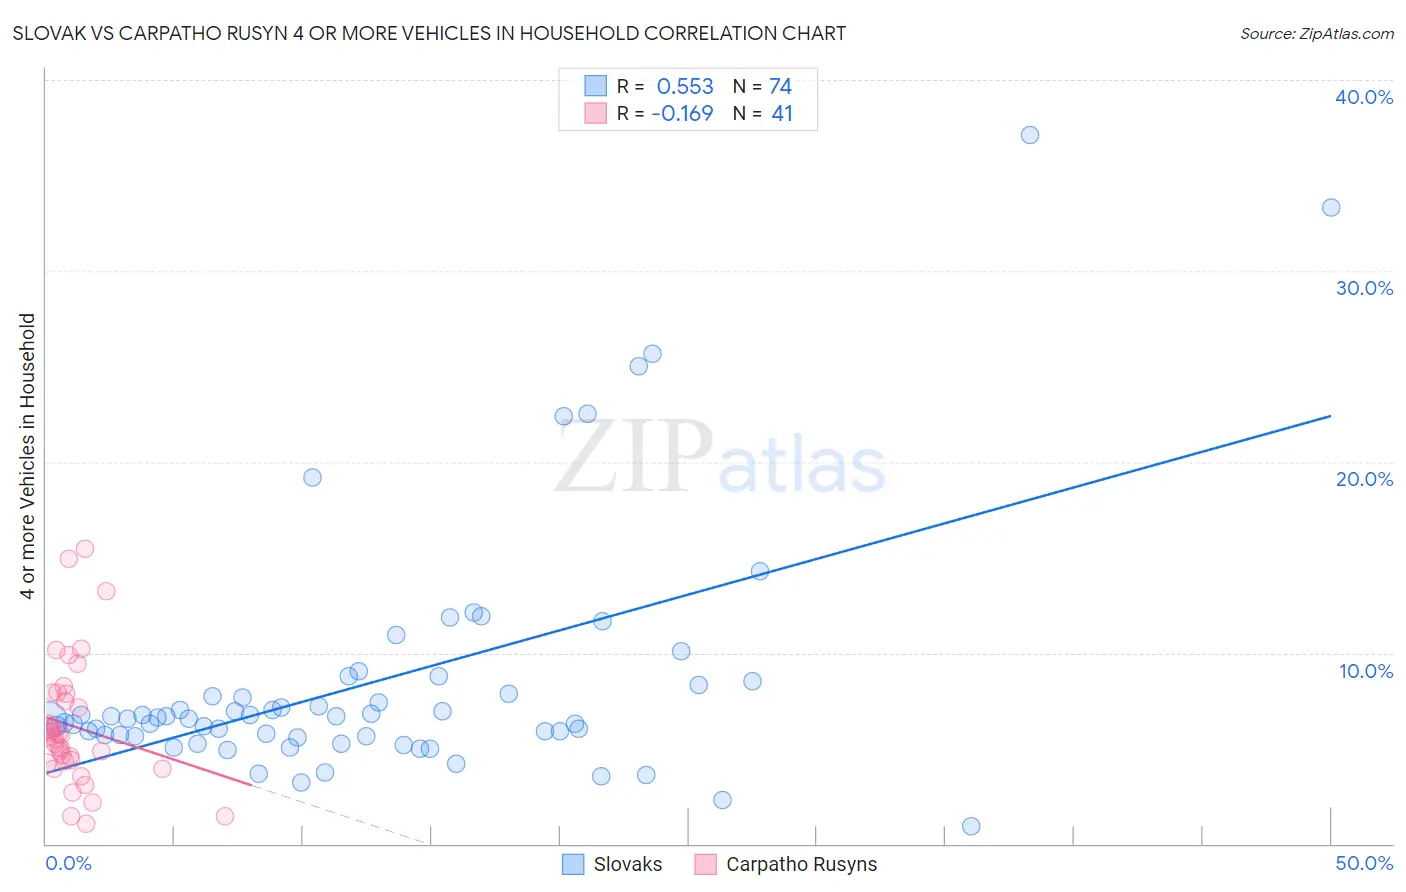 Slovak vs Carpatho Rusyn 4 or more Vehicles in Household